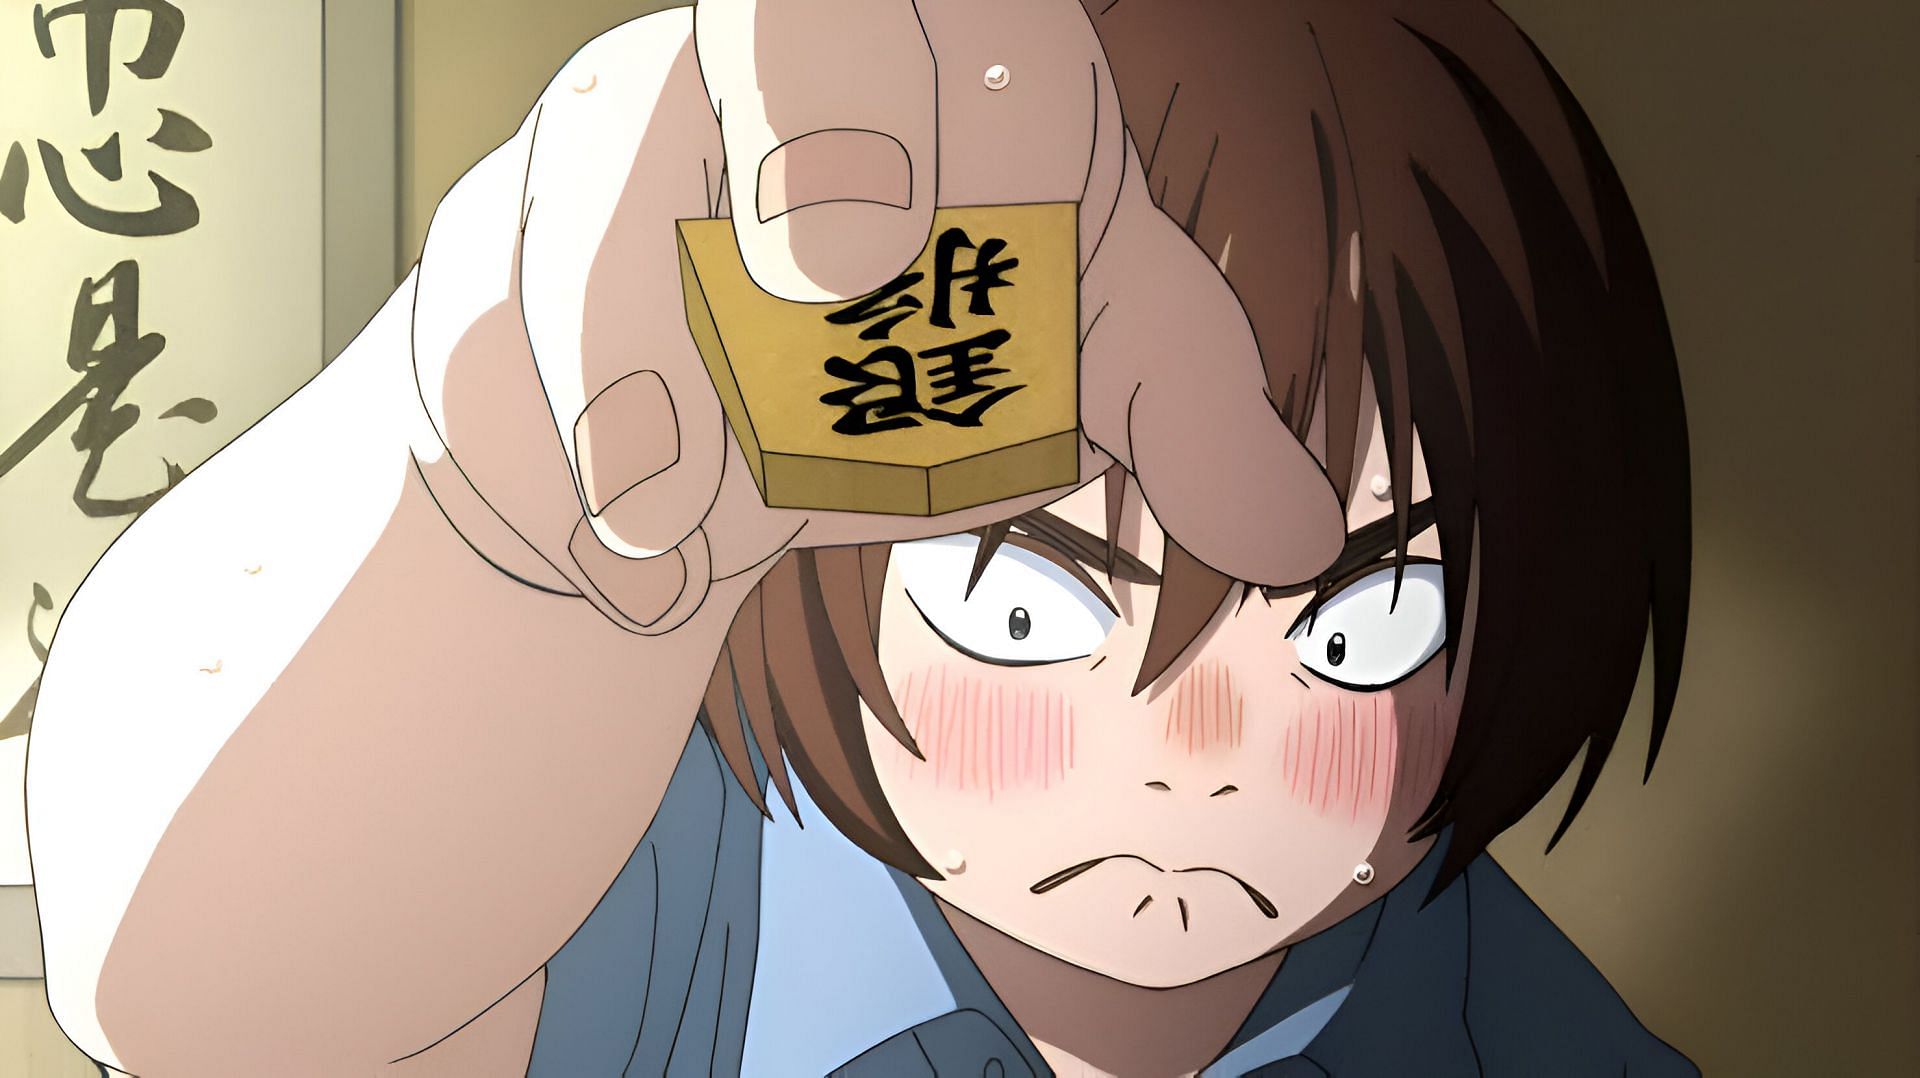 Nikaidou as seen in the anime (Image via Shaft)